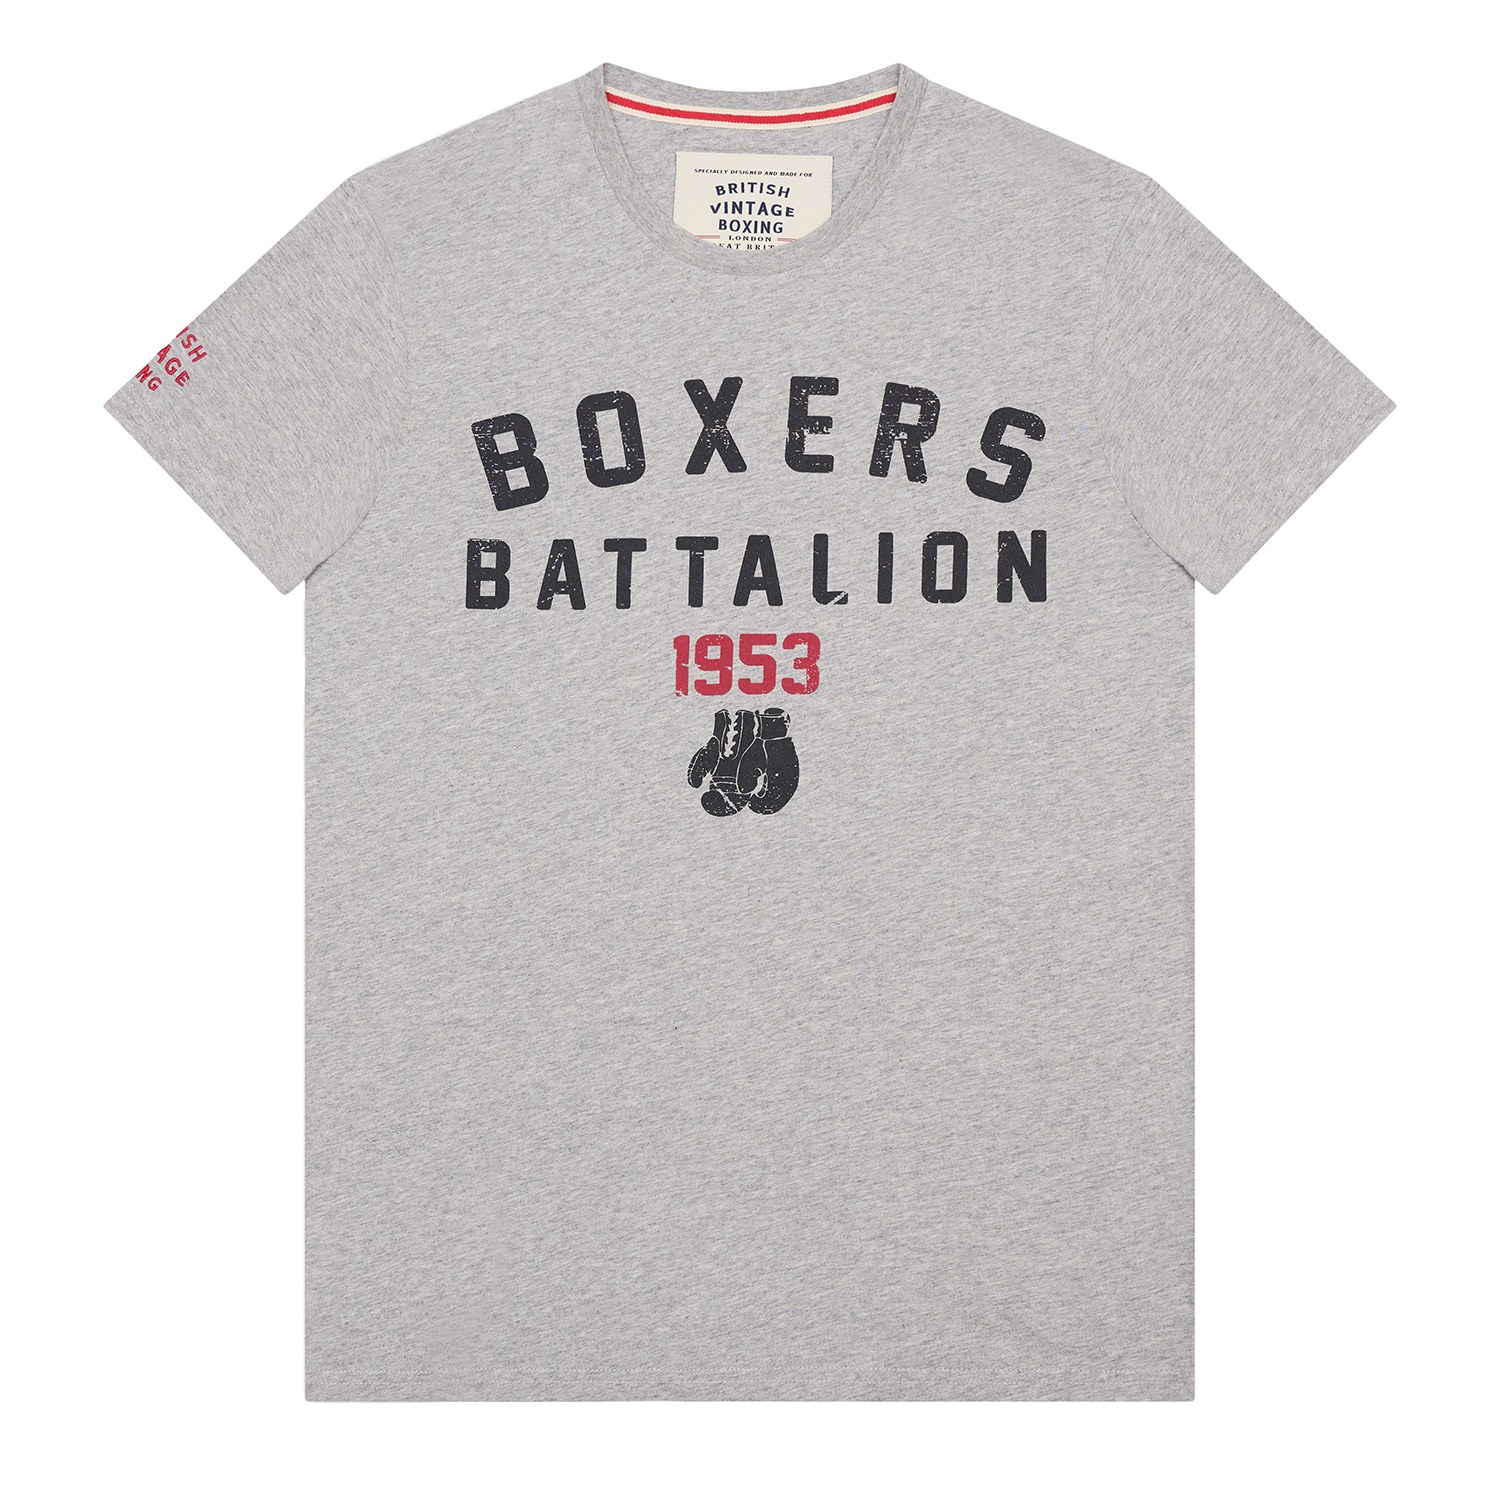 Men’s Grey Boxers Battalion T-Shirt Medium British Vintage Boxing